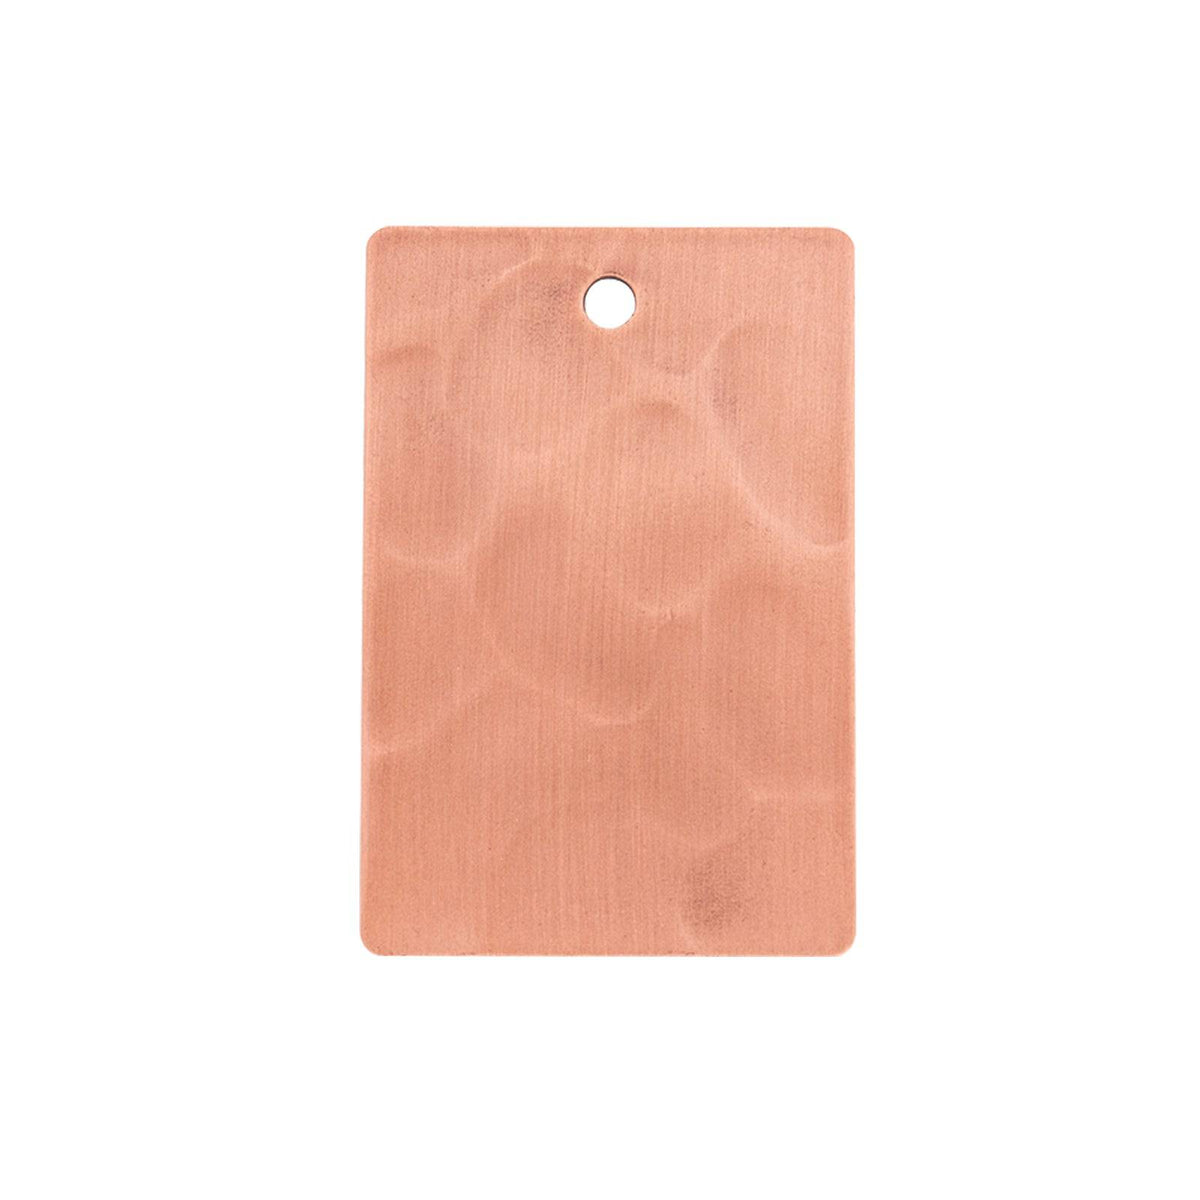 Fobest Copper Samples-Natural Copper Light Hammered Texture